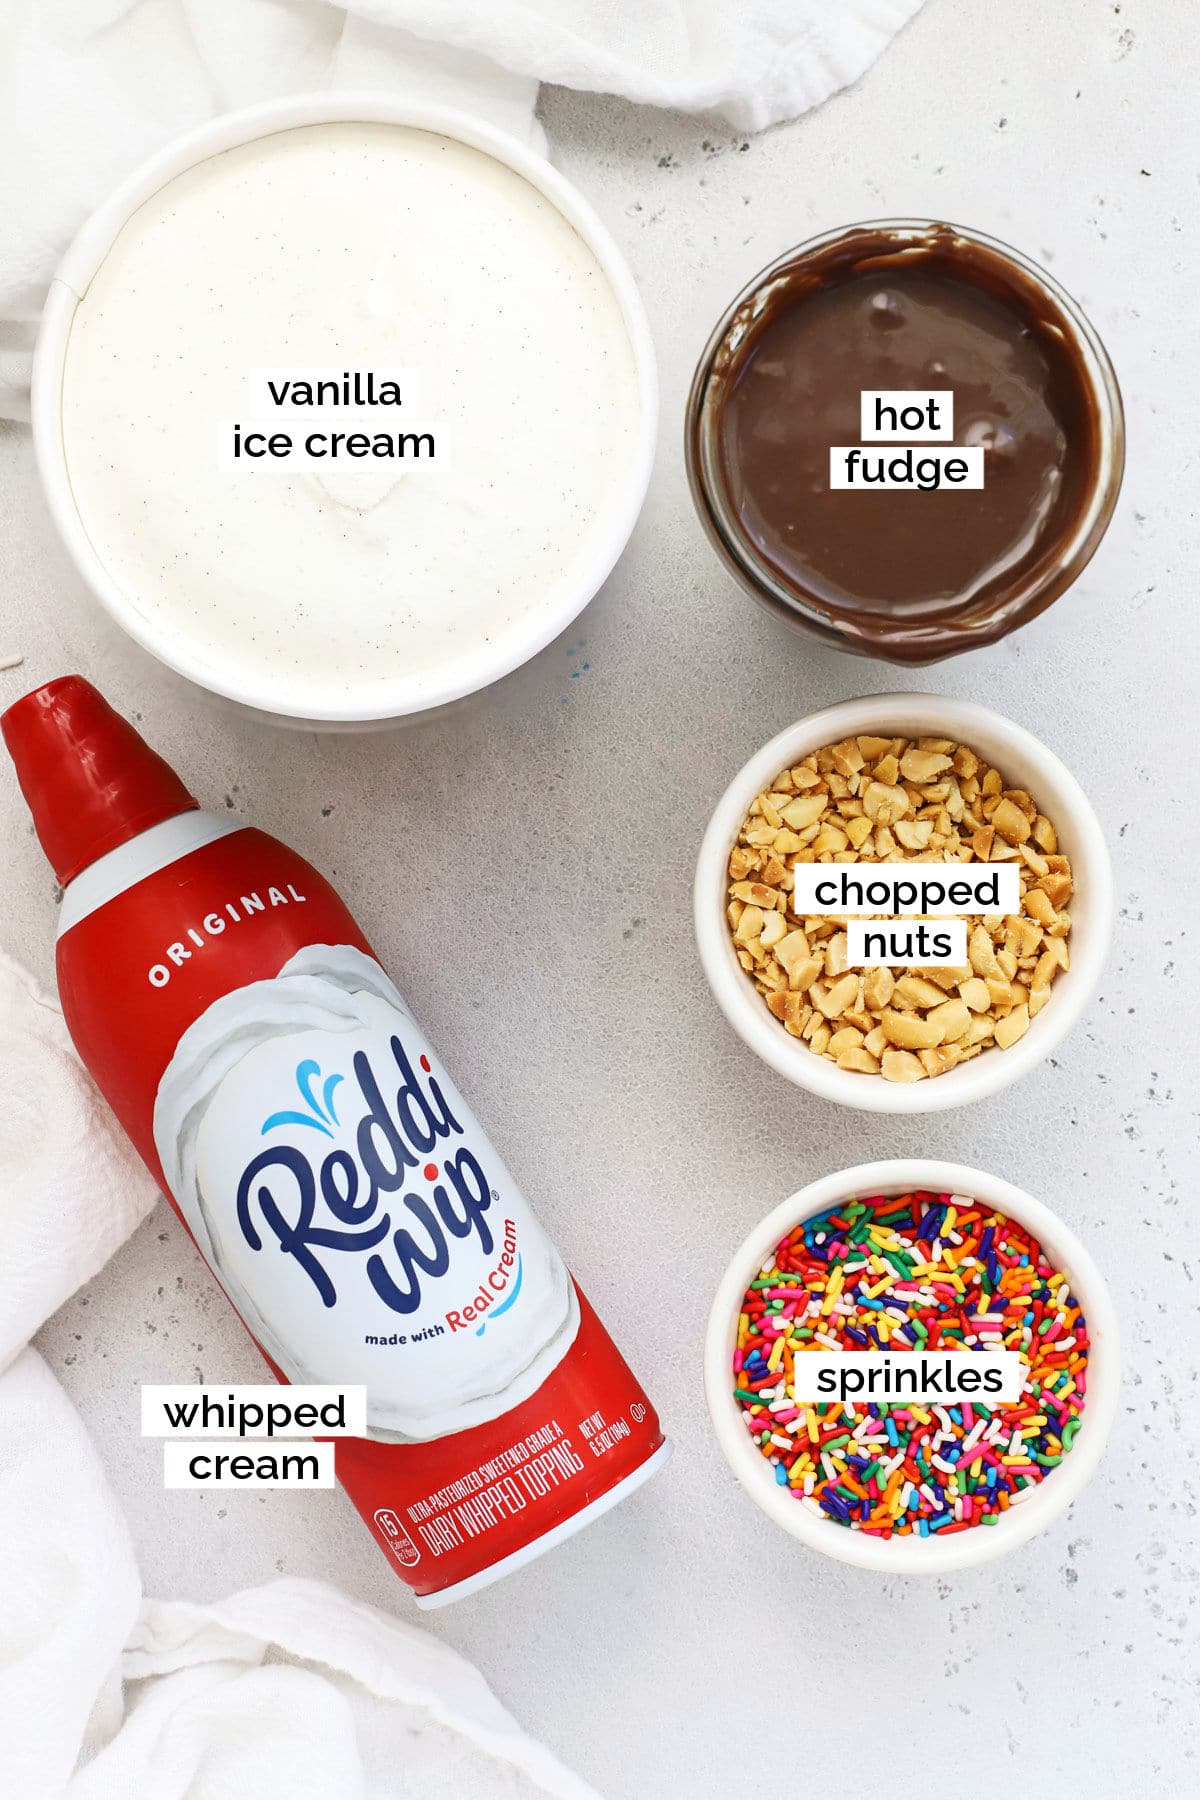 ingredients for a hot fudge sundae